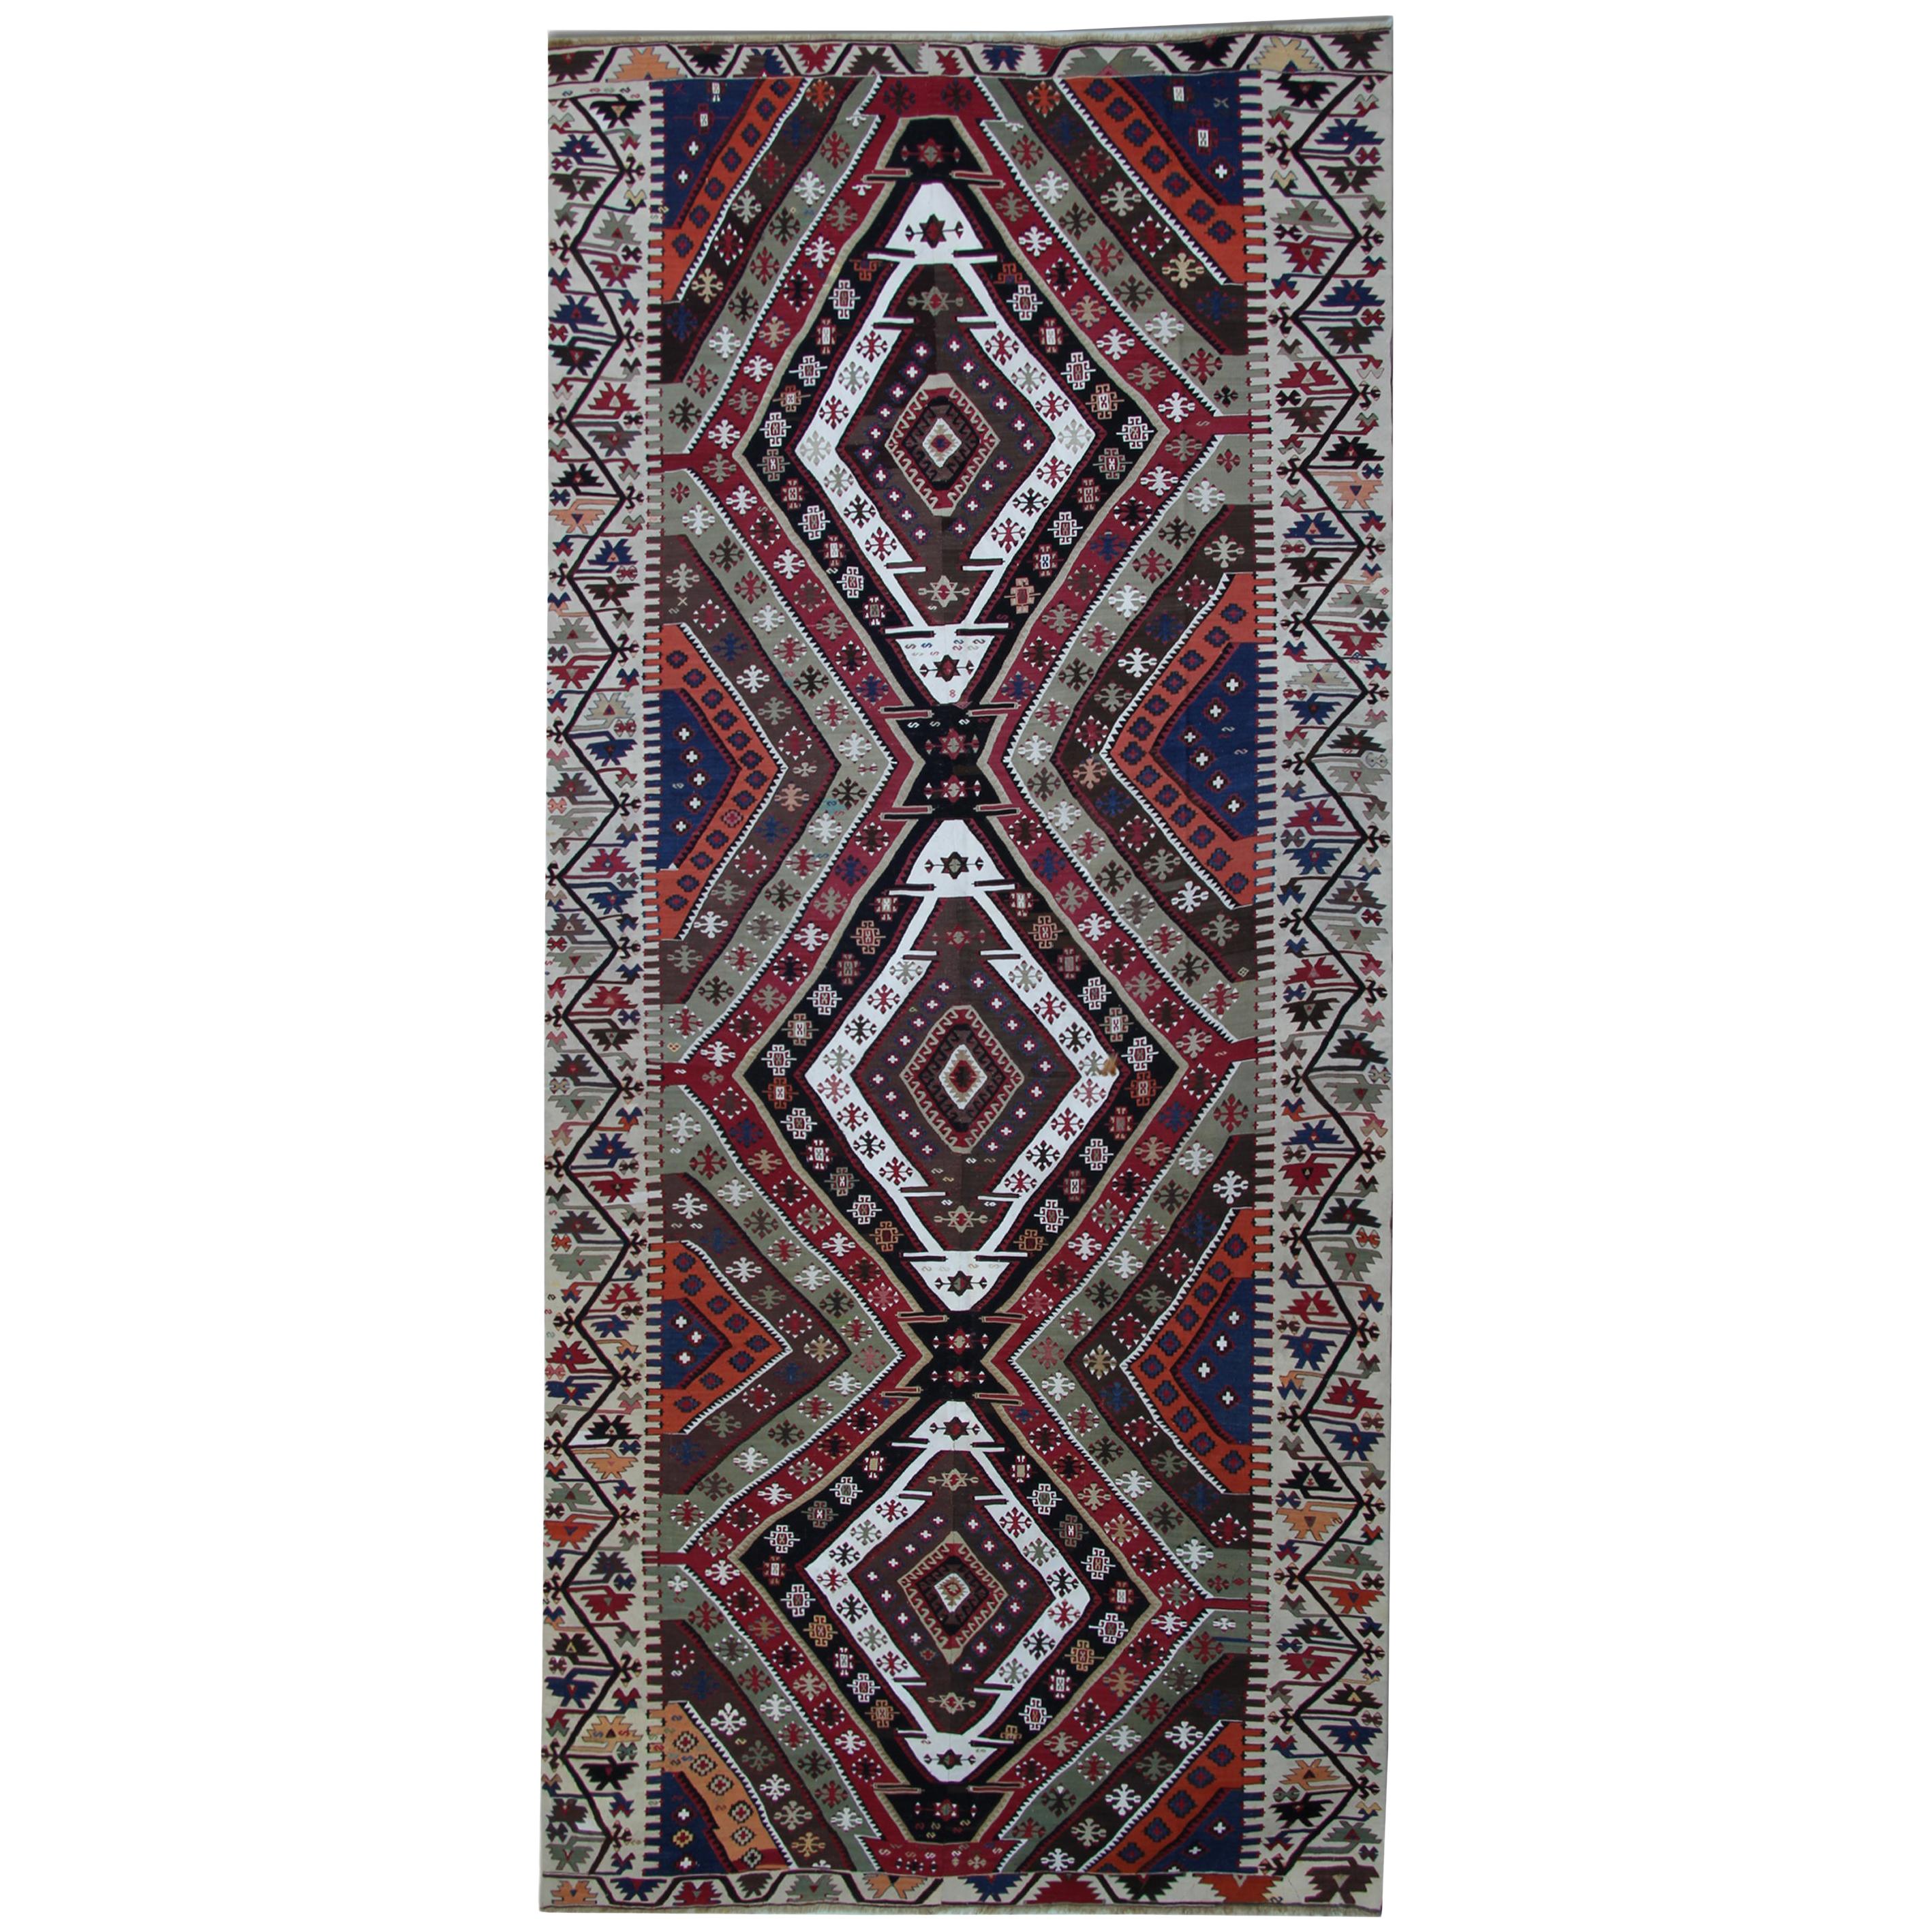 Tapis de couloir Kilim turcs, tapis ancien, tapis artisanal Tapis d'Orient